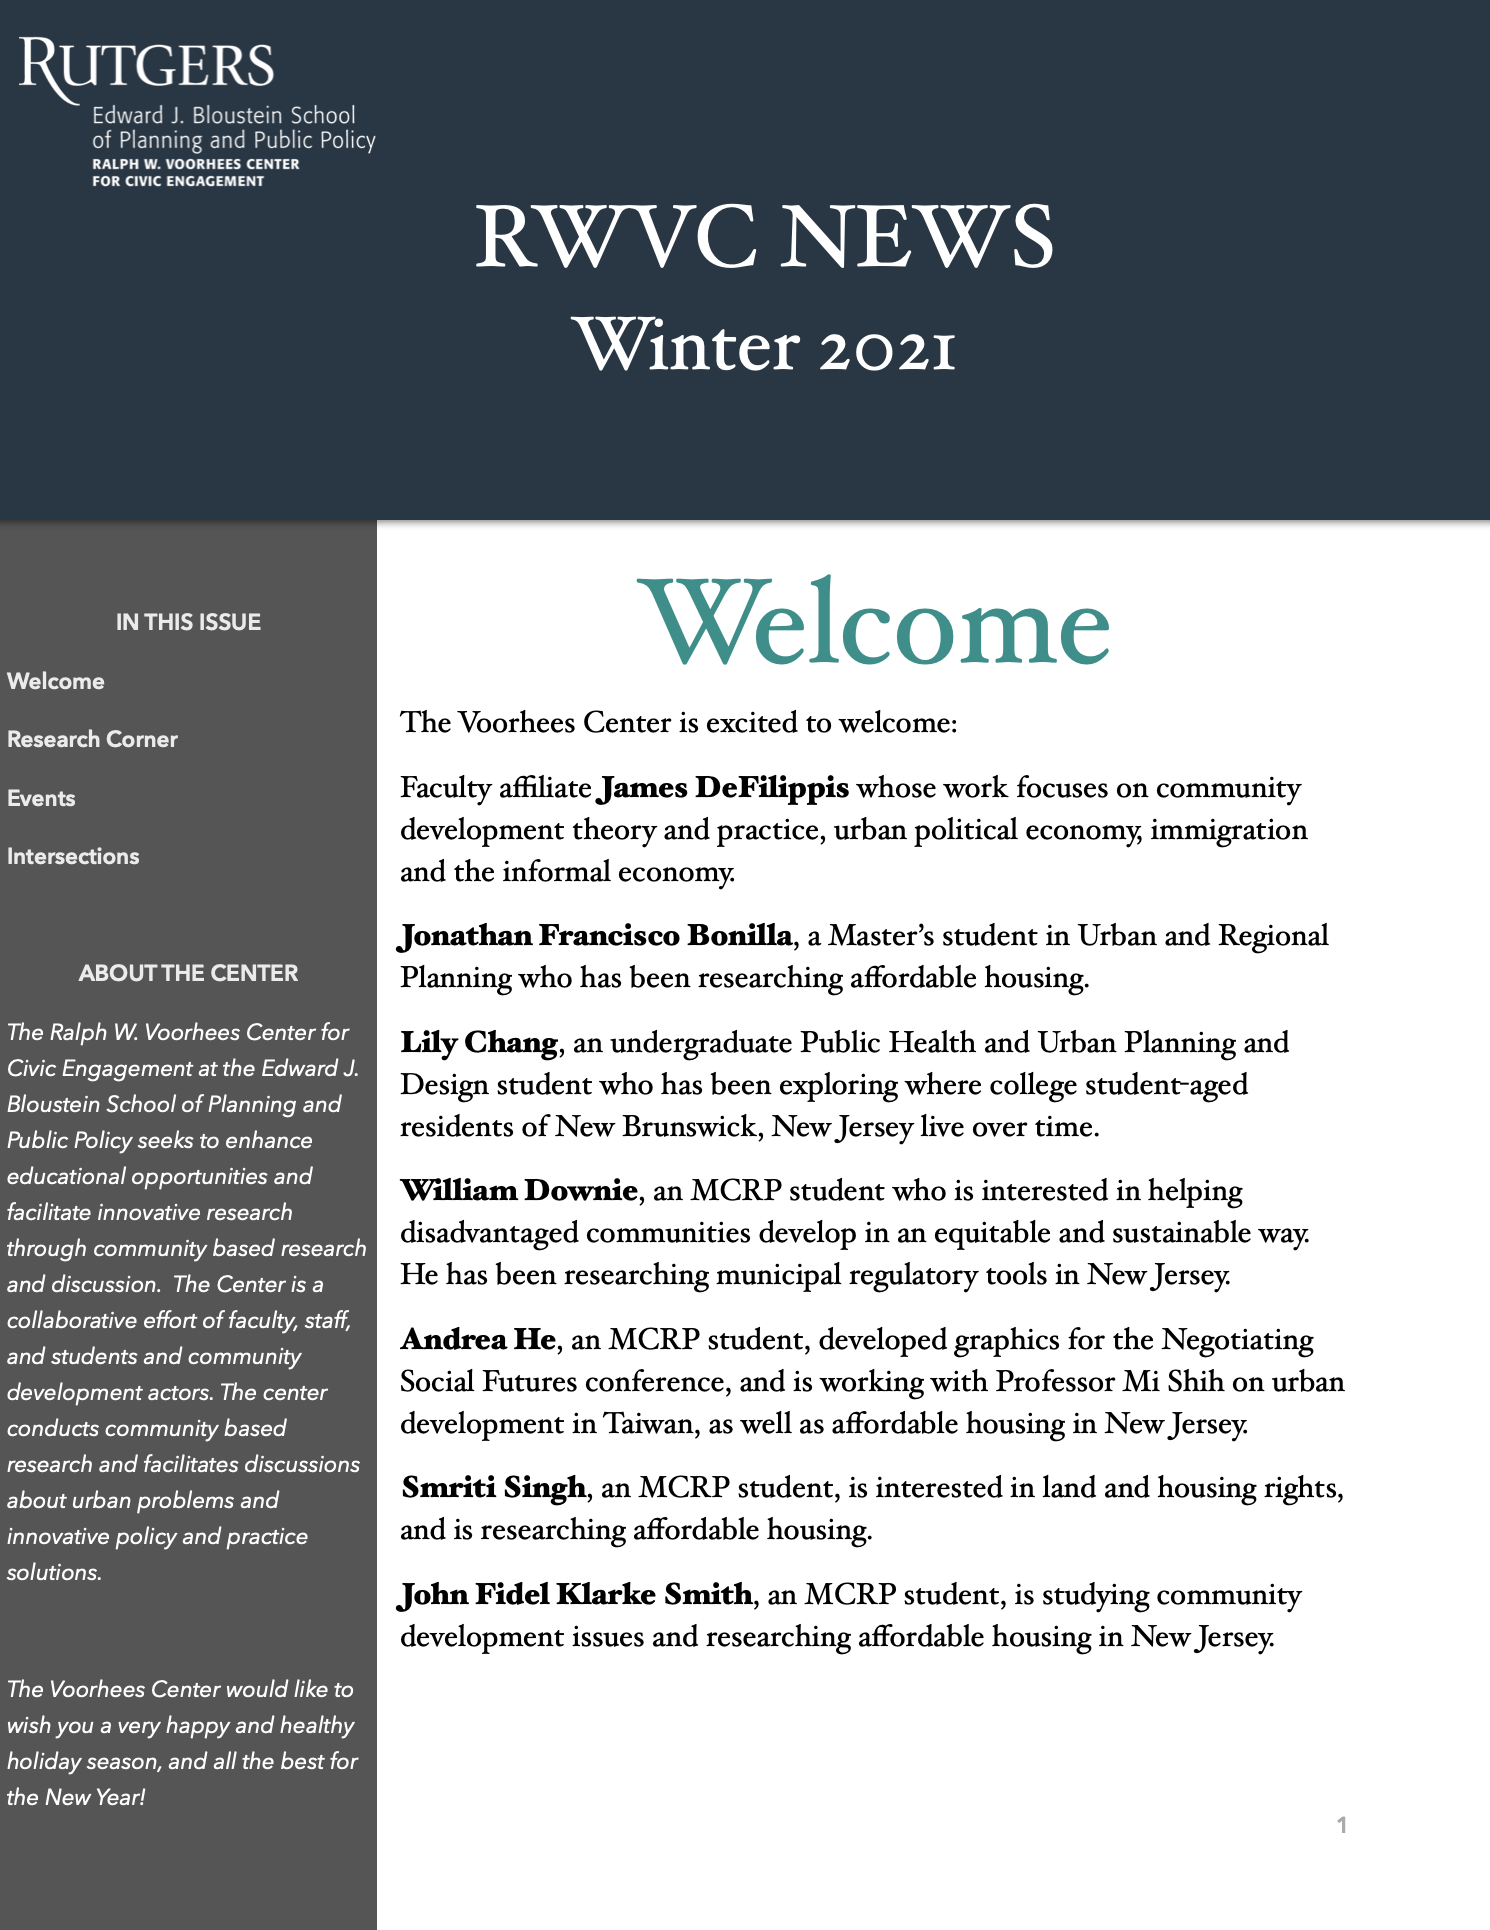 RWV-Winter-2021-Newsletter